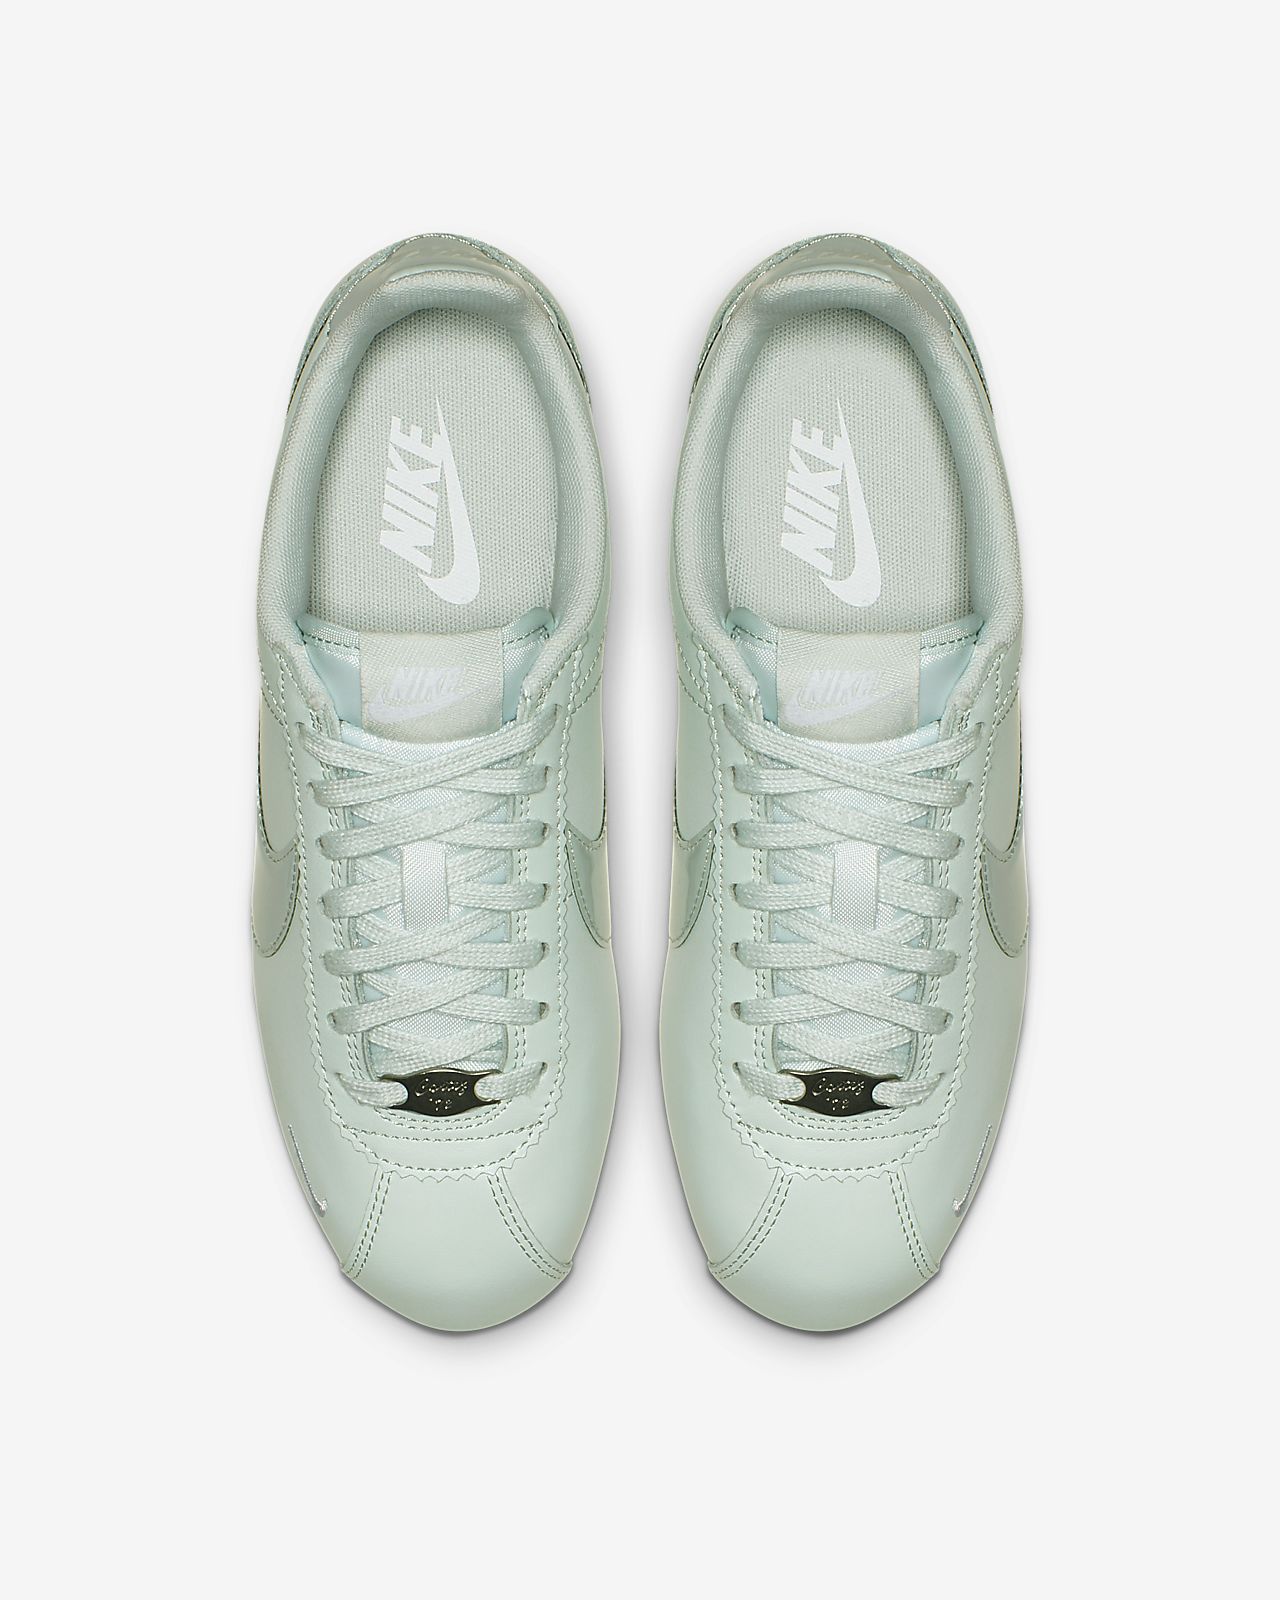 Nike Classic Cortez Premium Women's Shoe